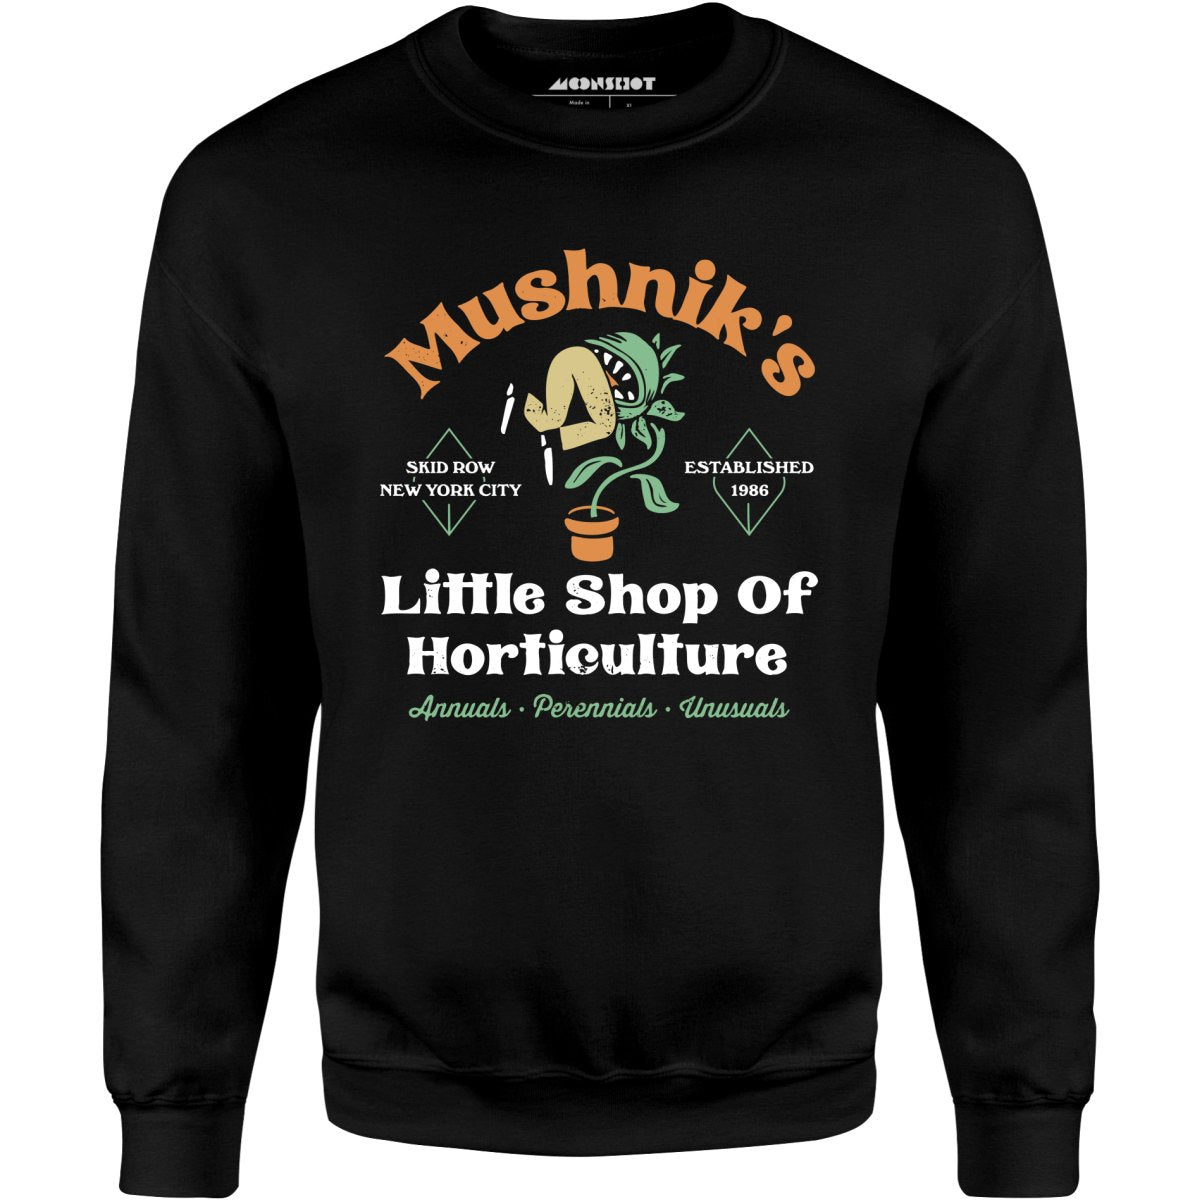 Mushnik's Little Shop of Horticulture - Unisex Sweatshirt